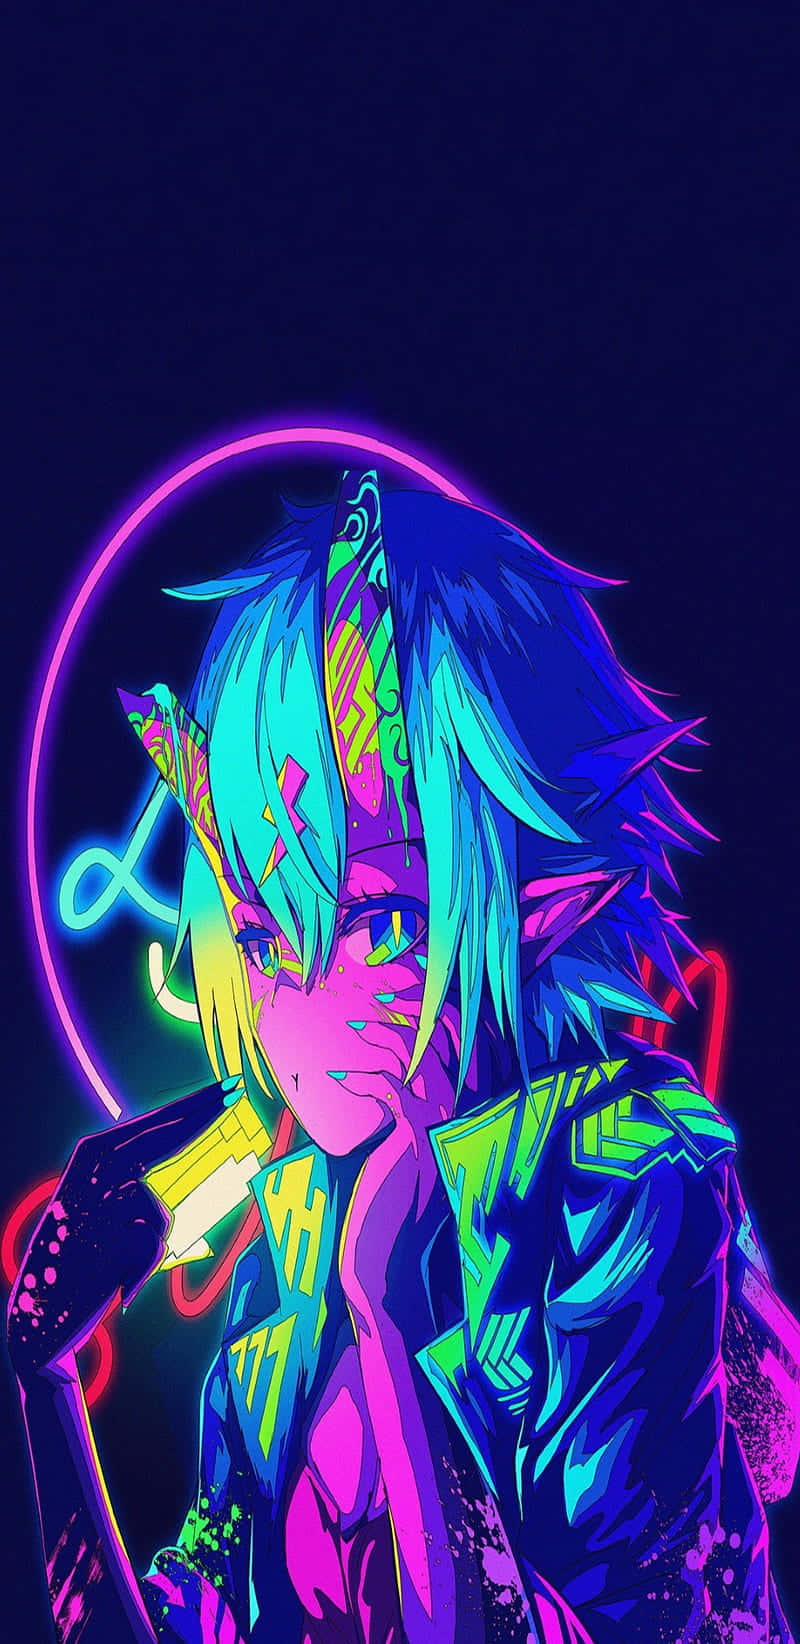 Neonanime Bright Boy - Neonskimrande Anime Ljuspojke. Wallpaper